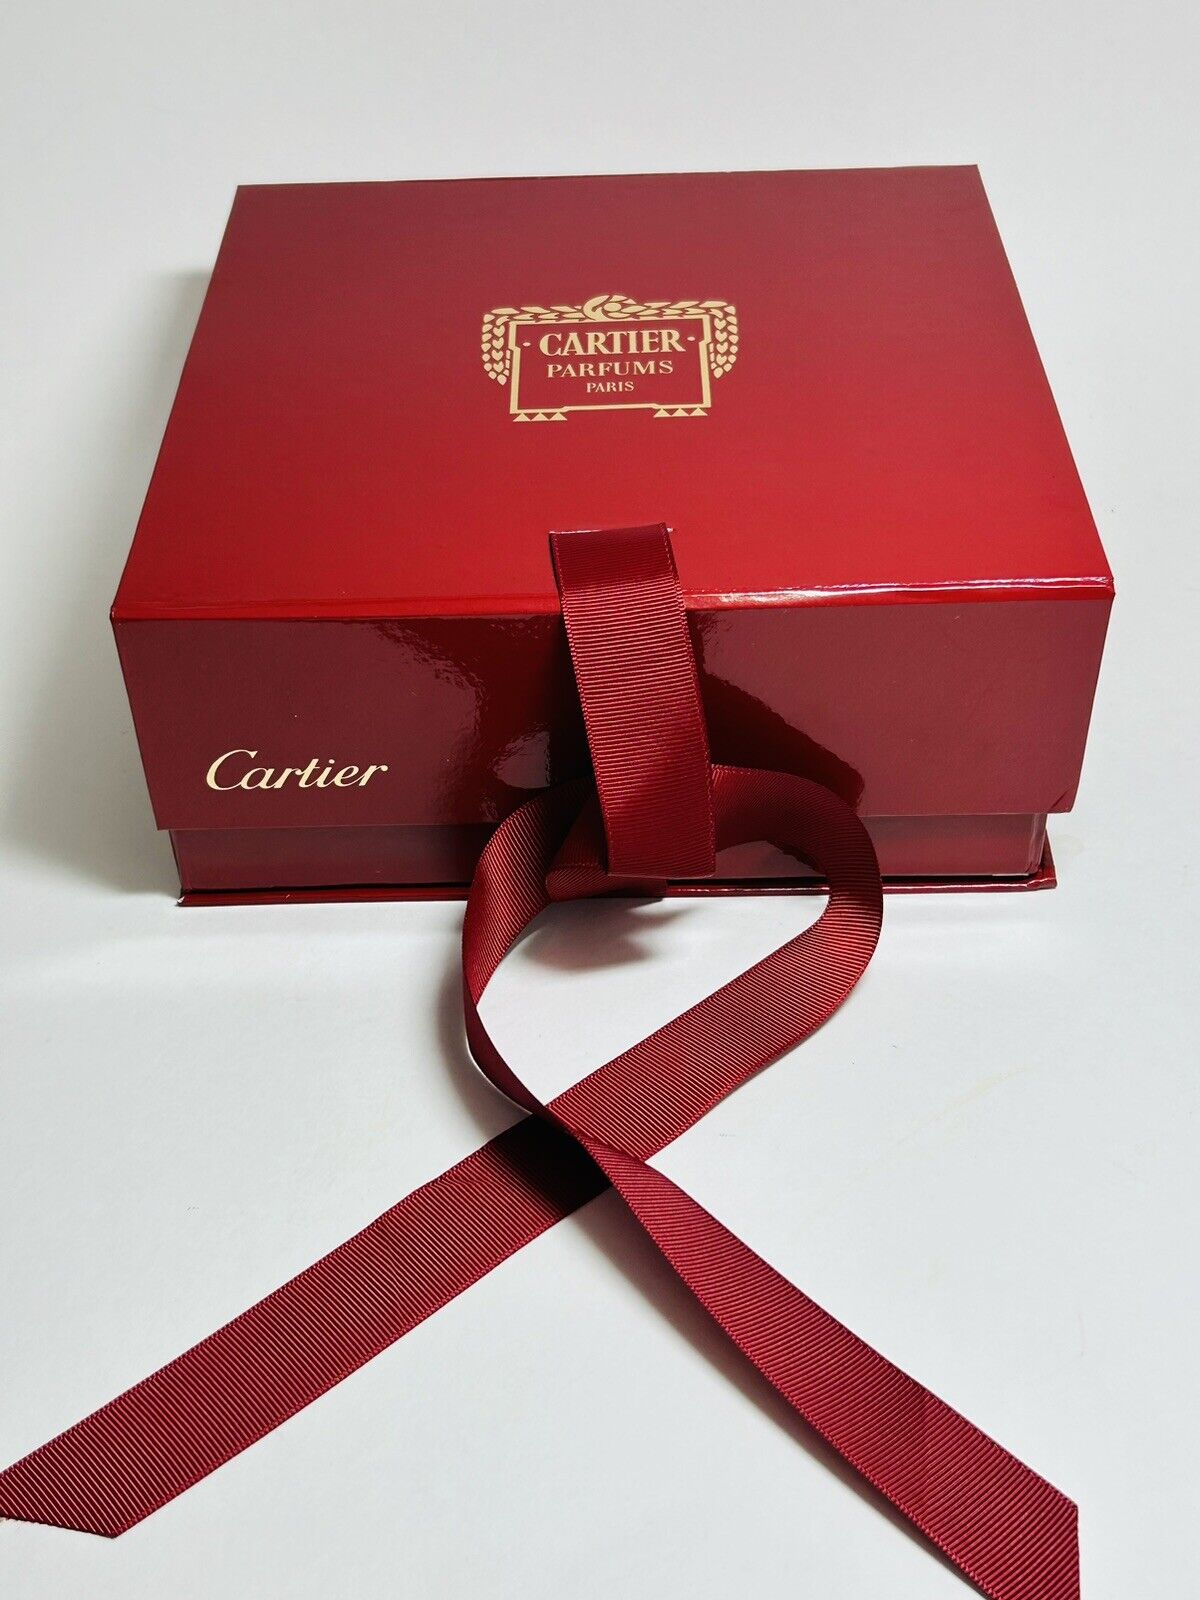 CARTIER Parfums Paris Red Presentation Box only w Grosgrain Ribbon Ties 8x8x3 